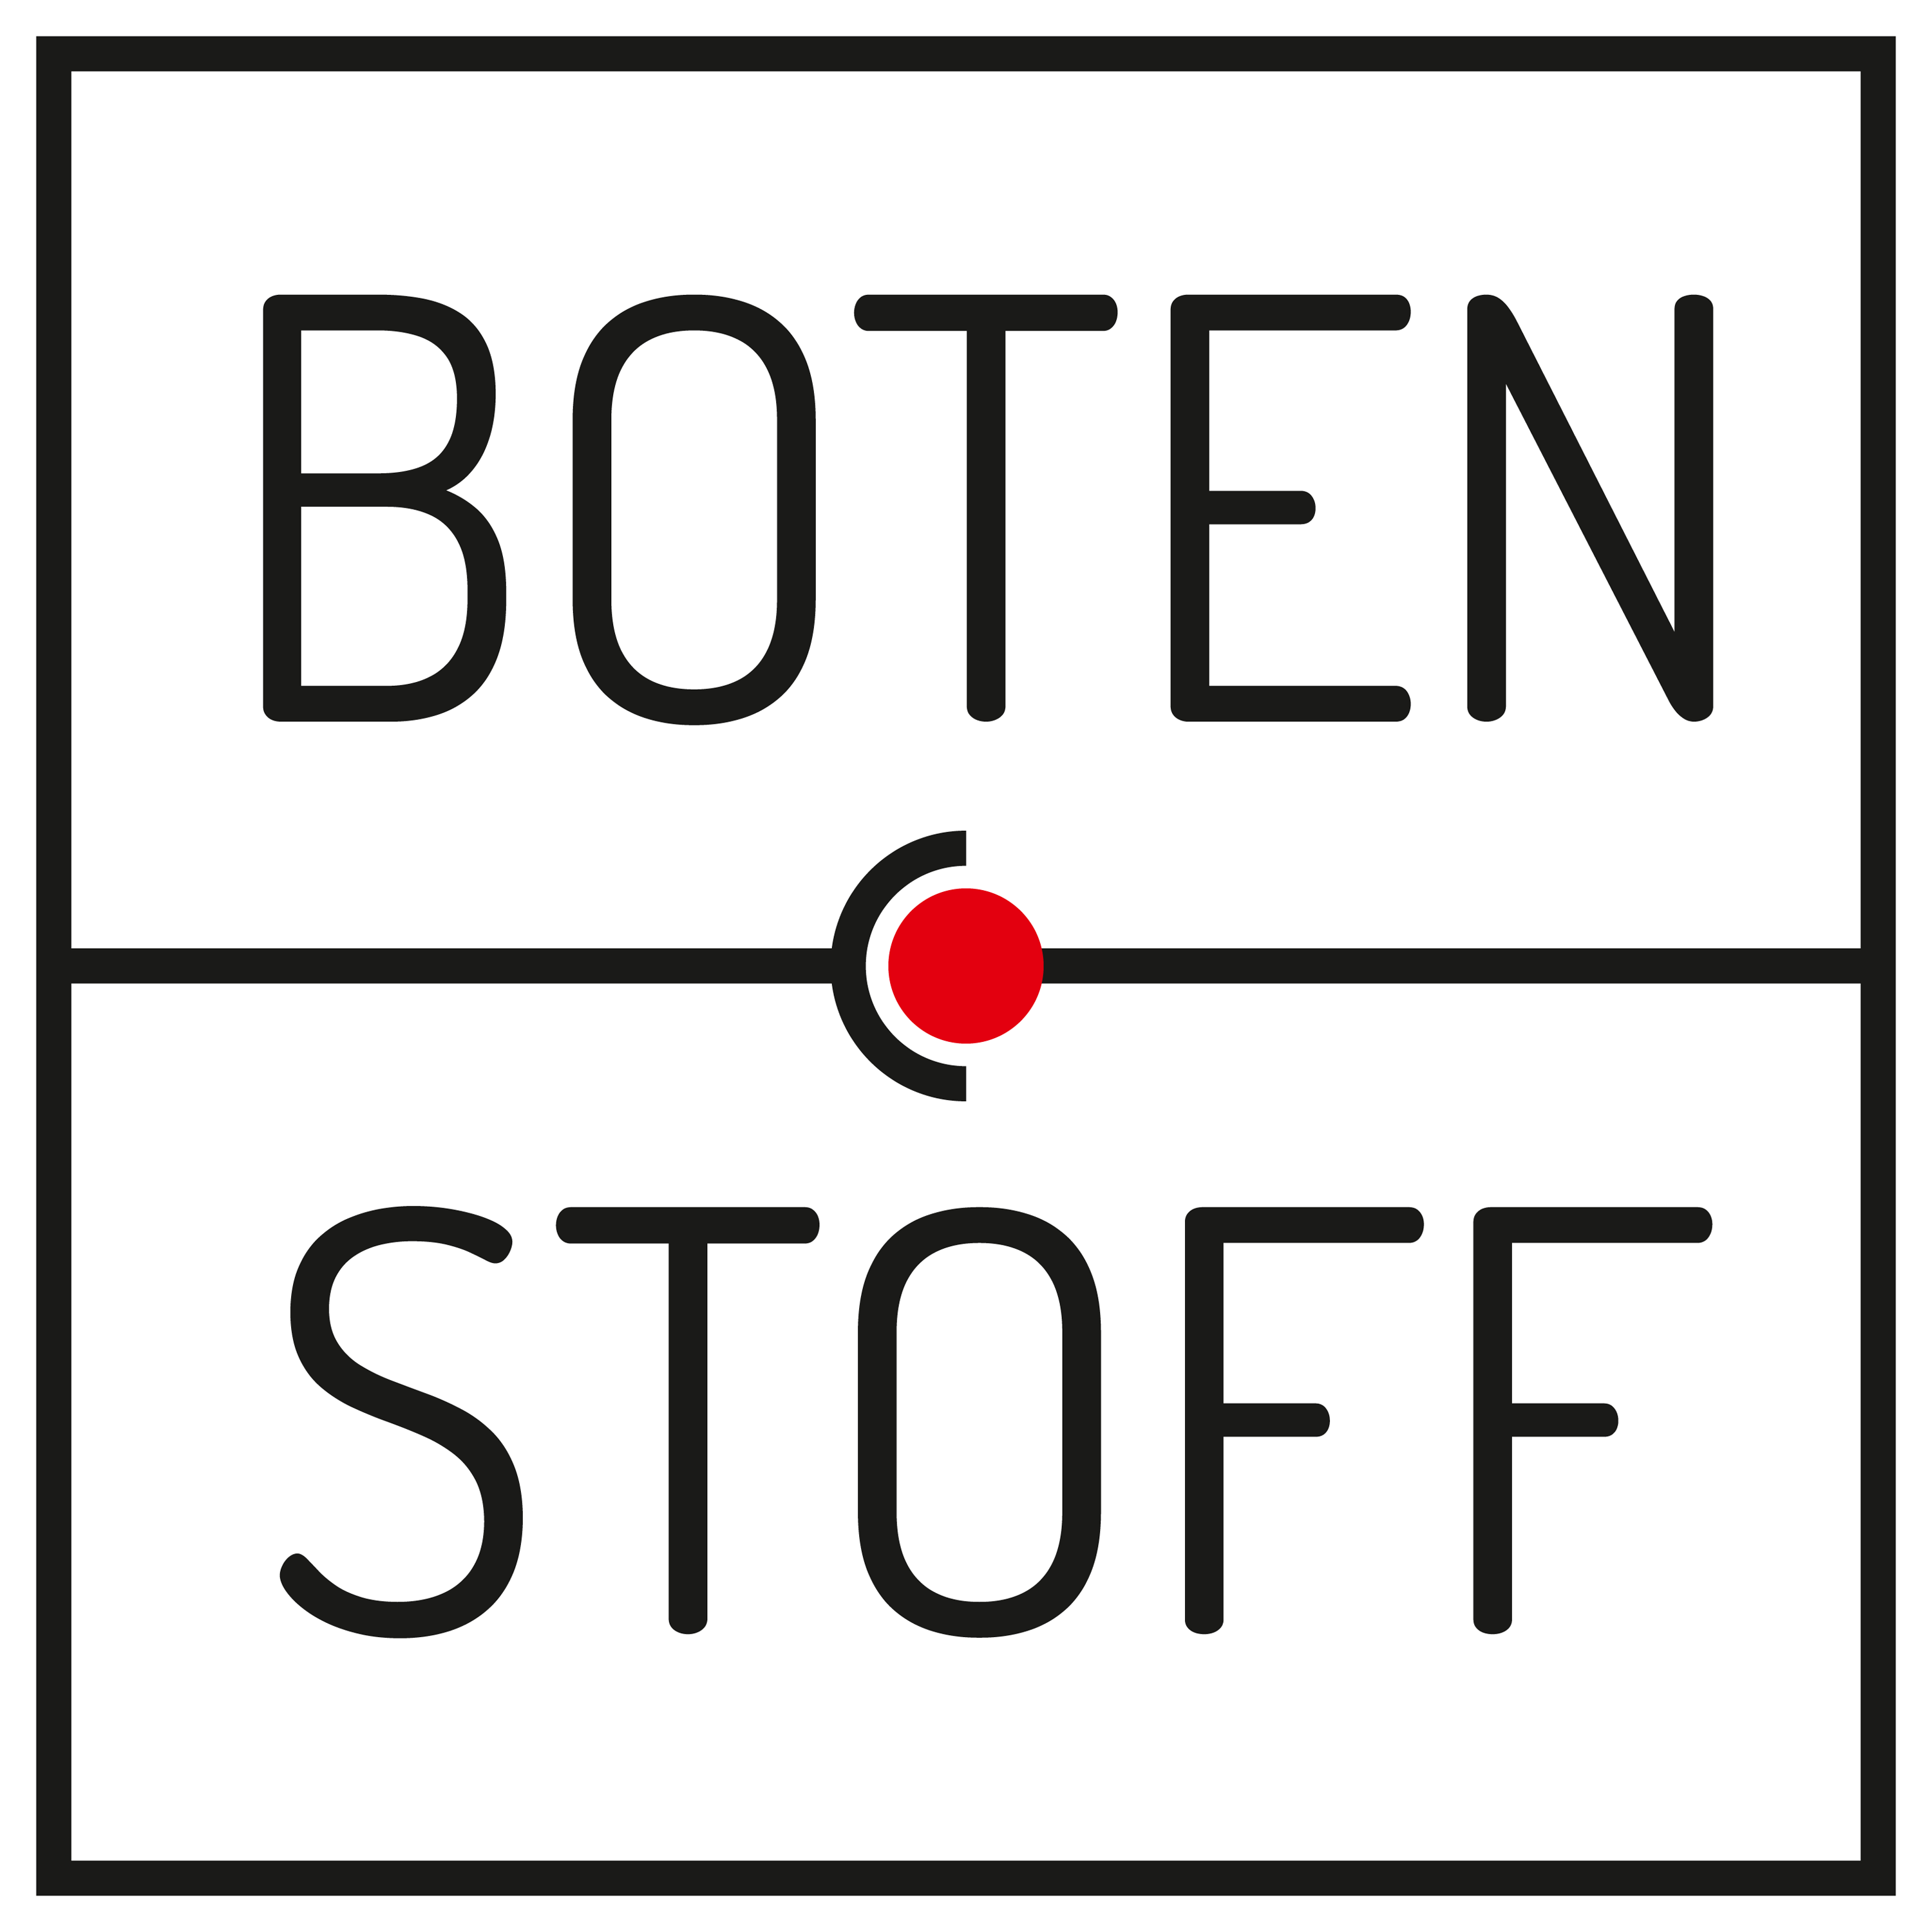 Botenstoff - der Biologie-Berufe-Podcast